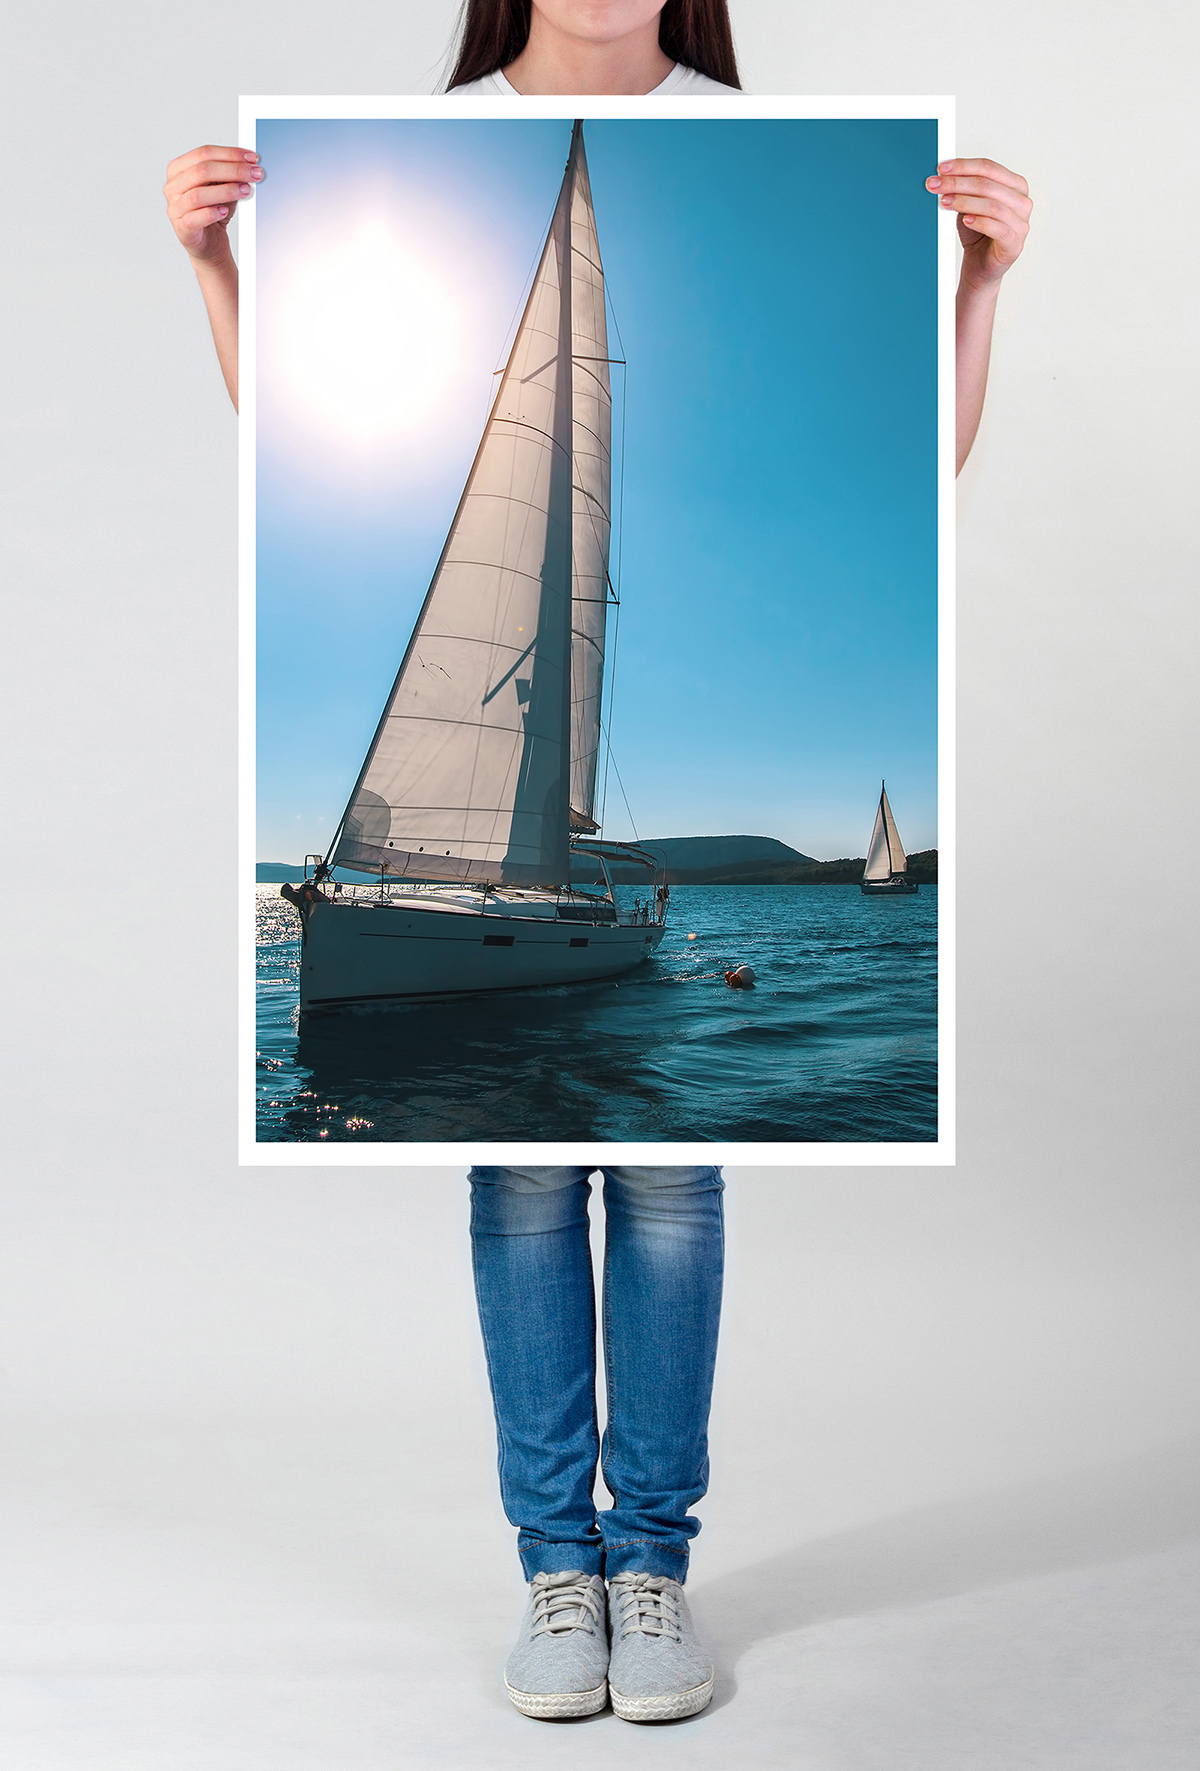 60x90cm Poster Landschaftsfotografie  Yacht bei Segelregatta